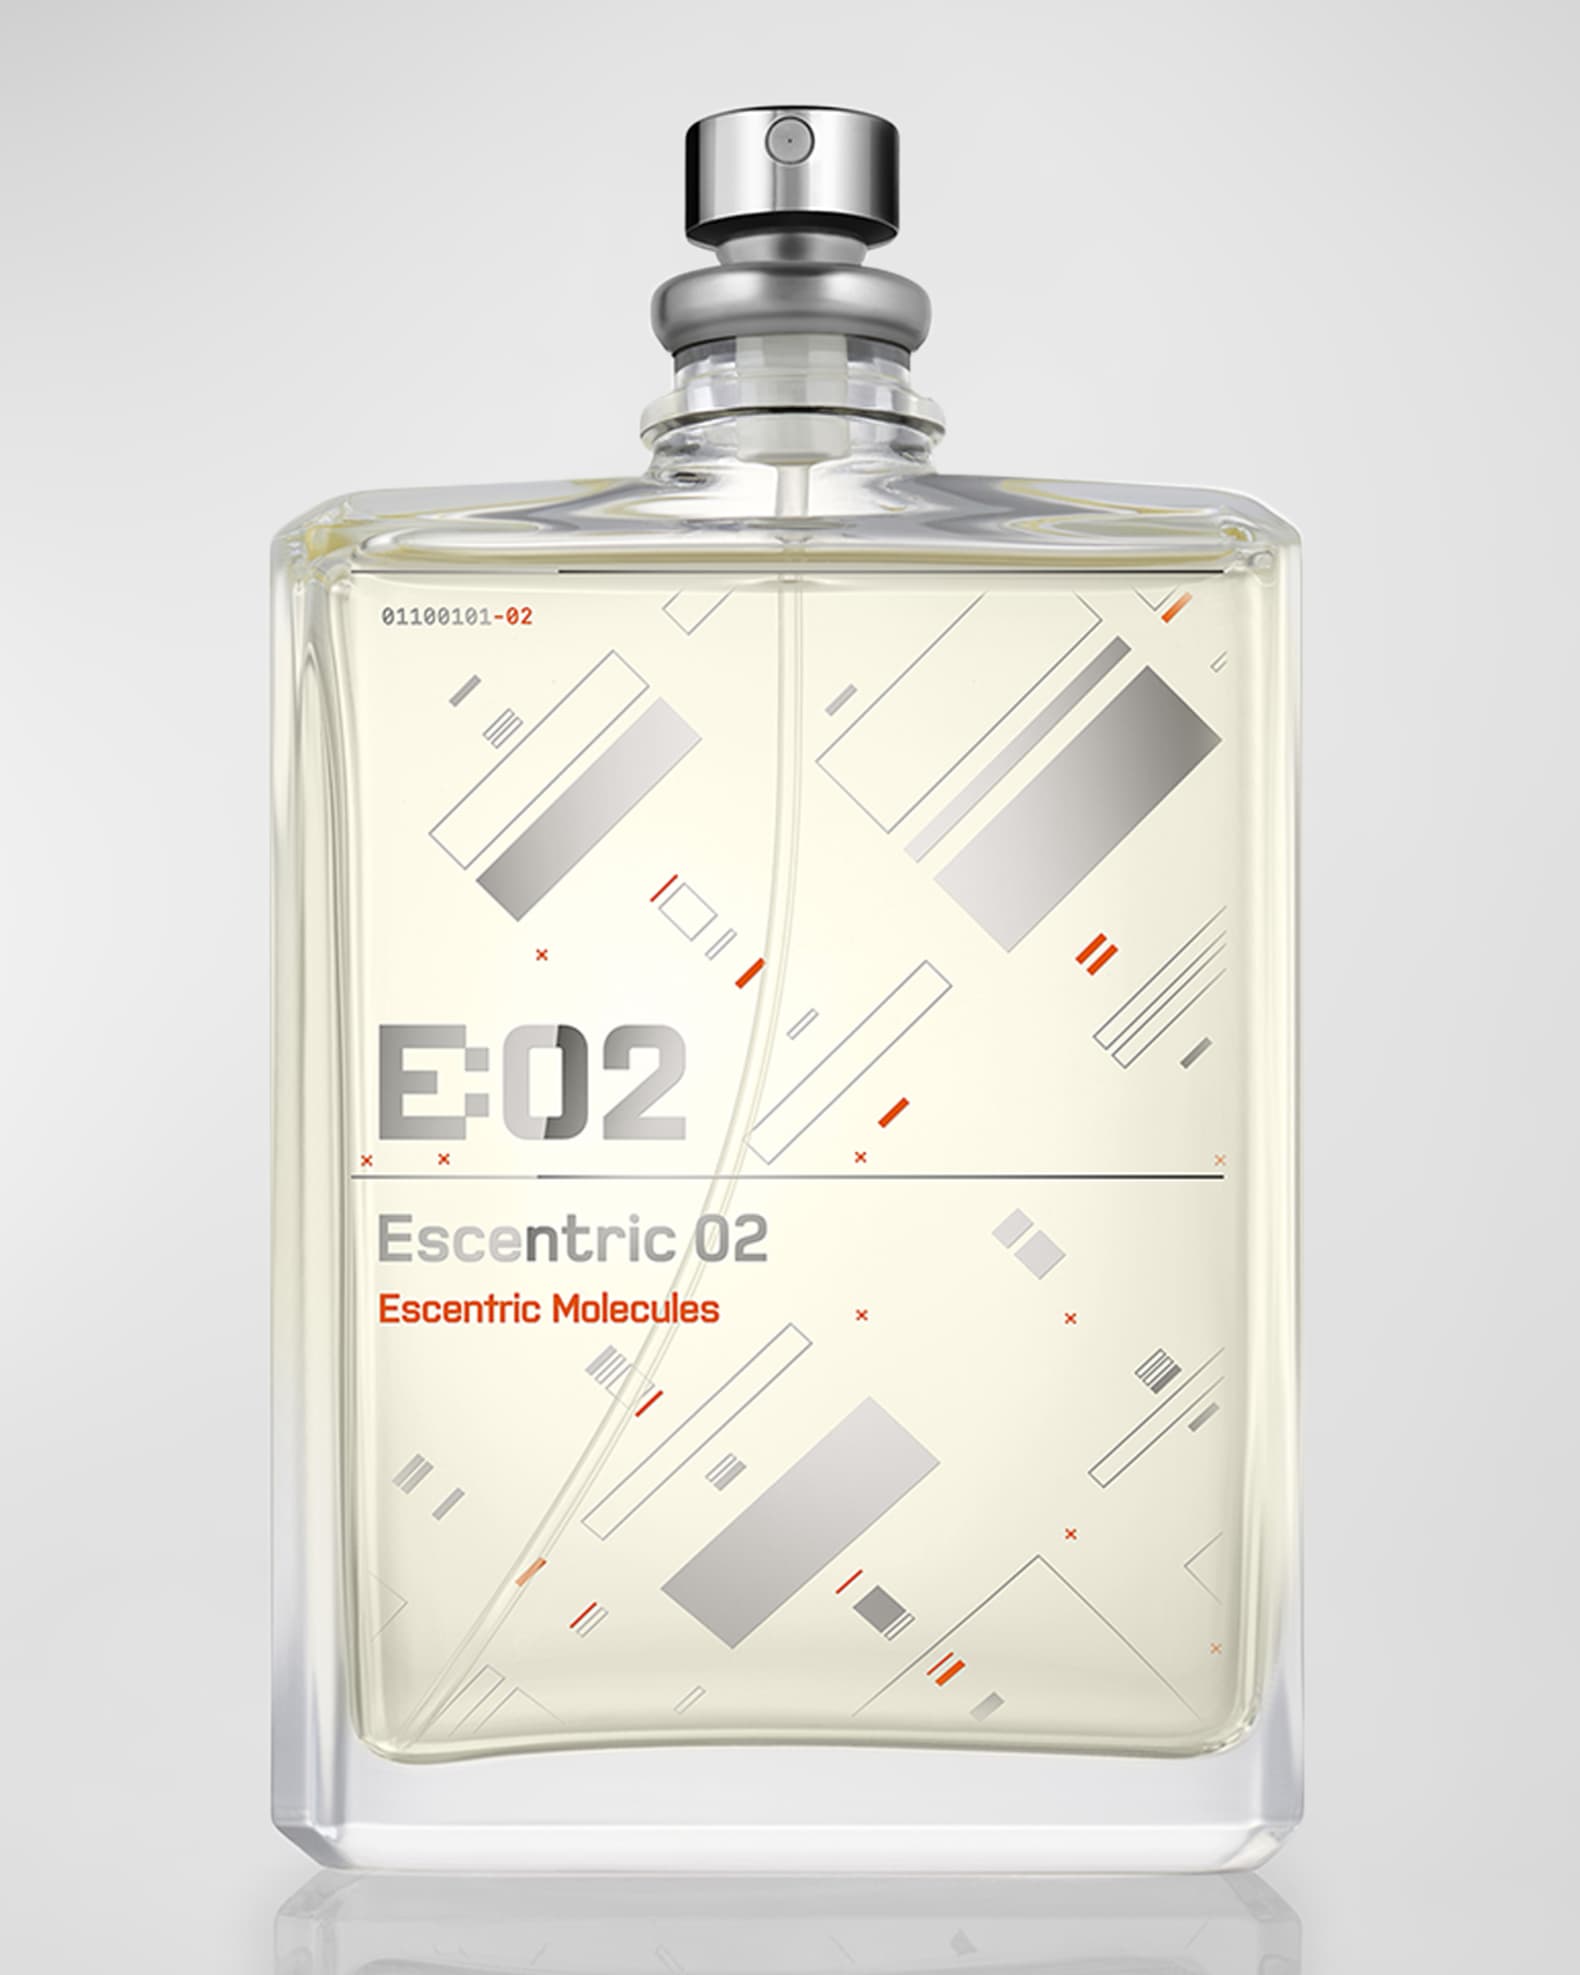 Escentric 03 - Travel Spray Eau de Toilette by Escentric Molecules